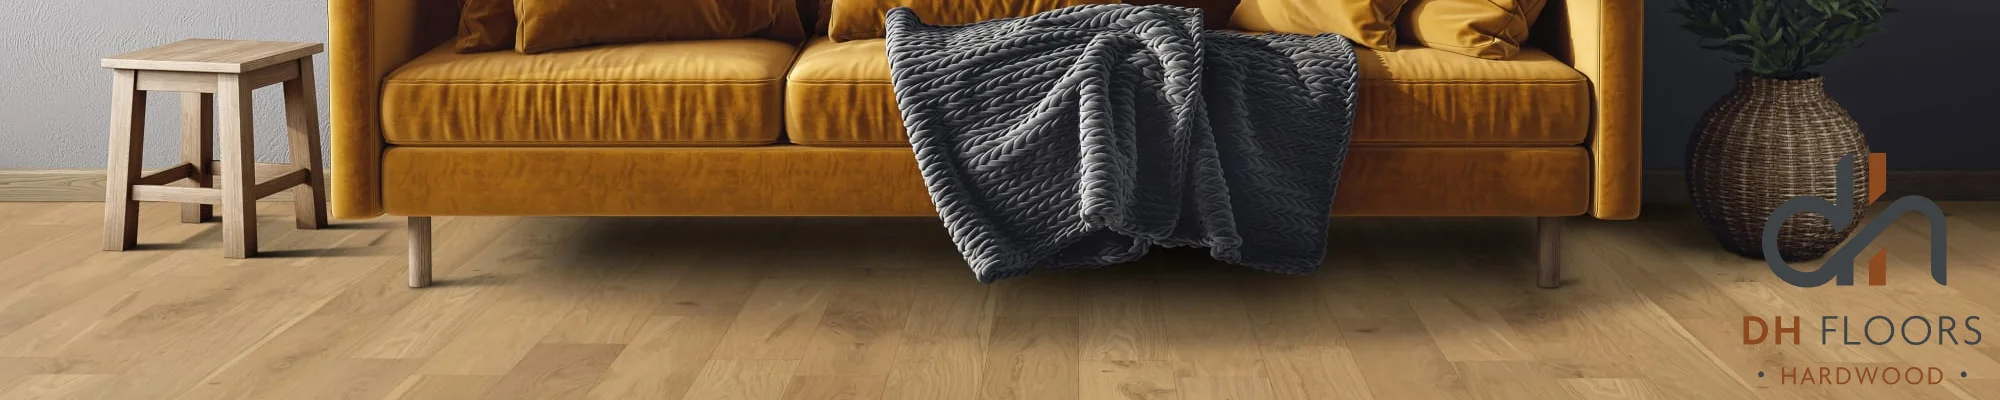 yellow-sofa-on-natural-hardwood-flooring-format.2000x400